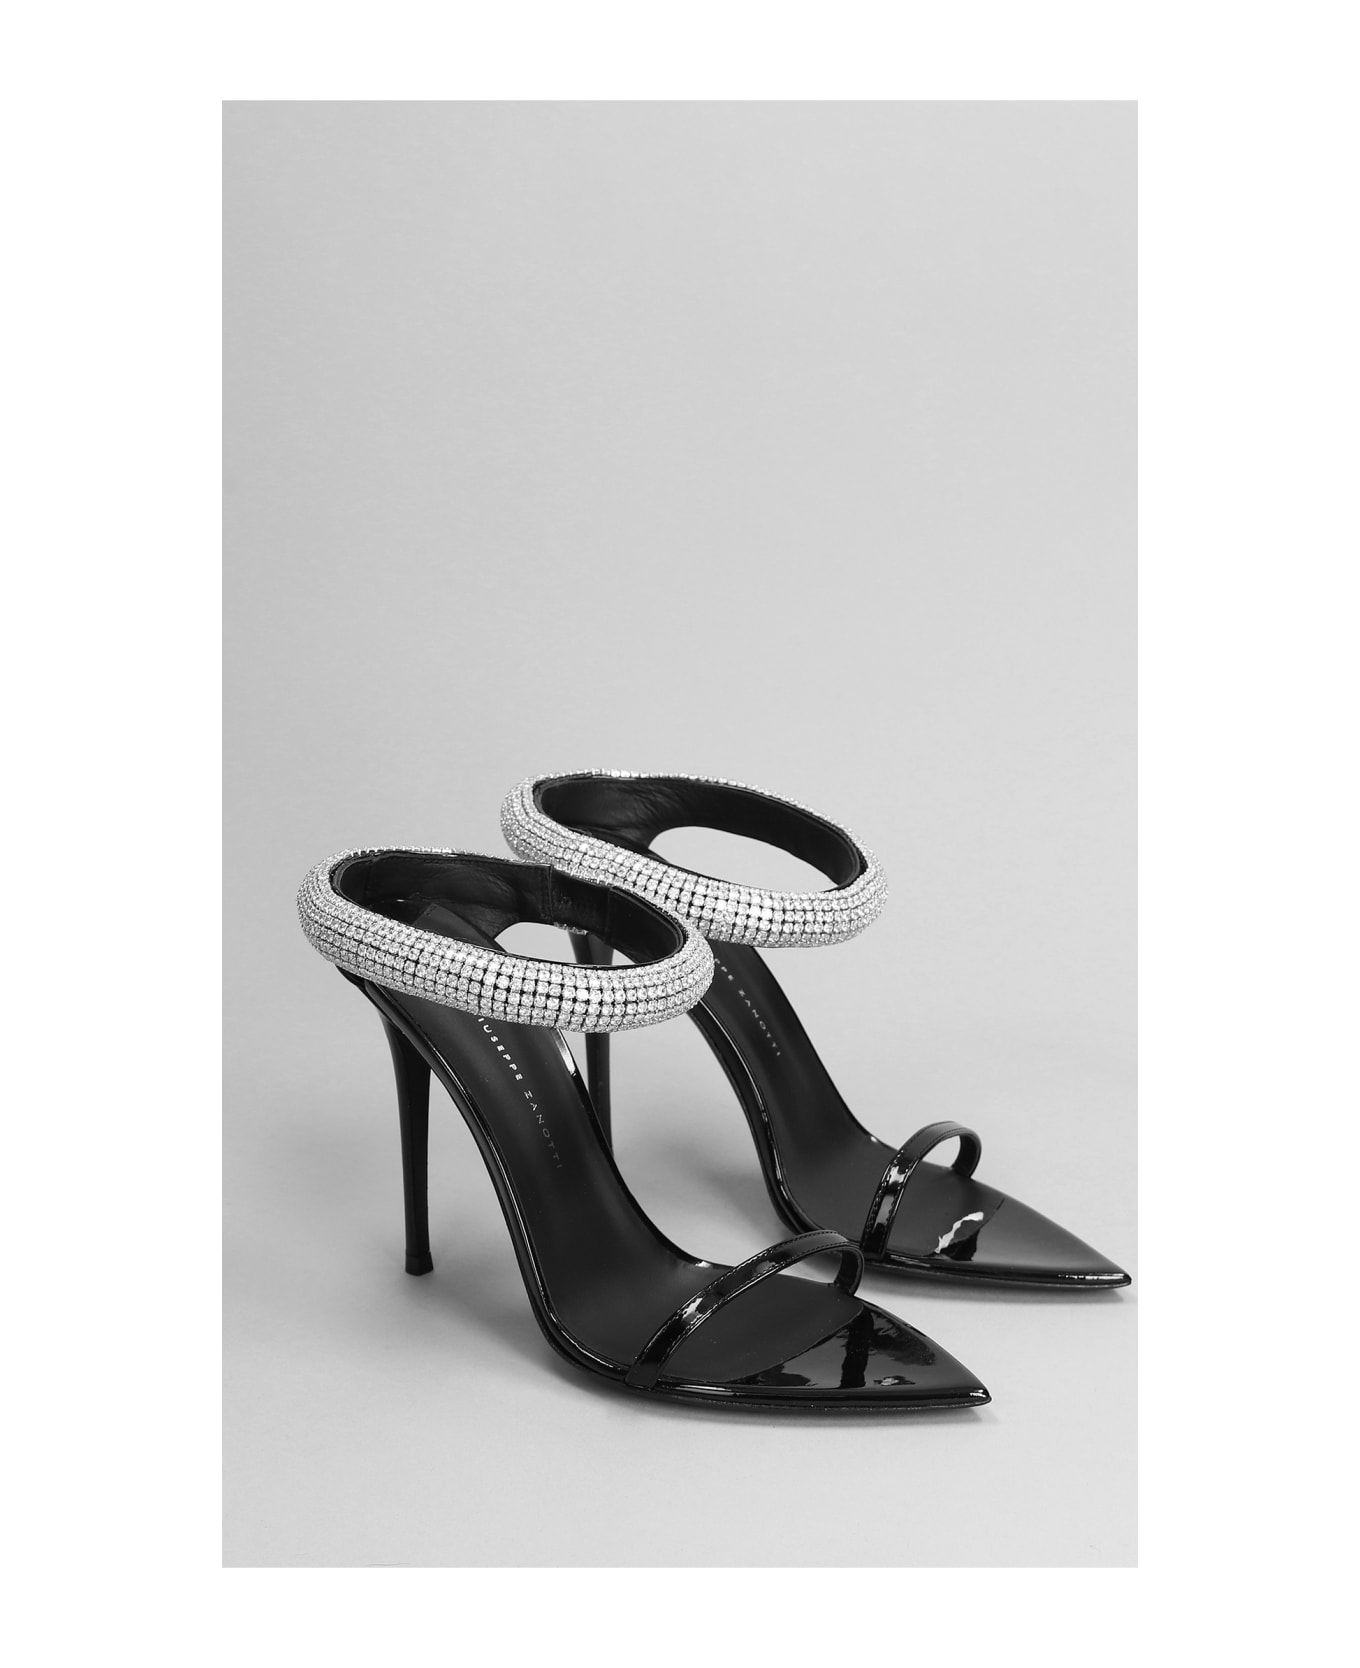 Giuseppe Zanotti Sandals In Black Leather - black サンダル